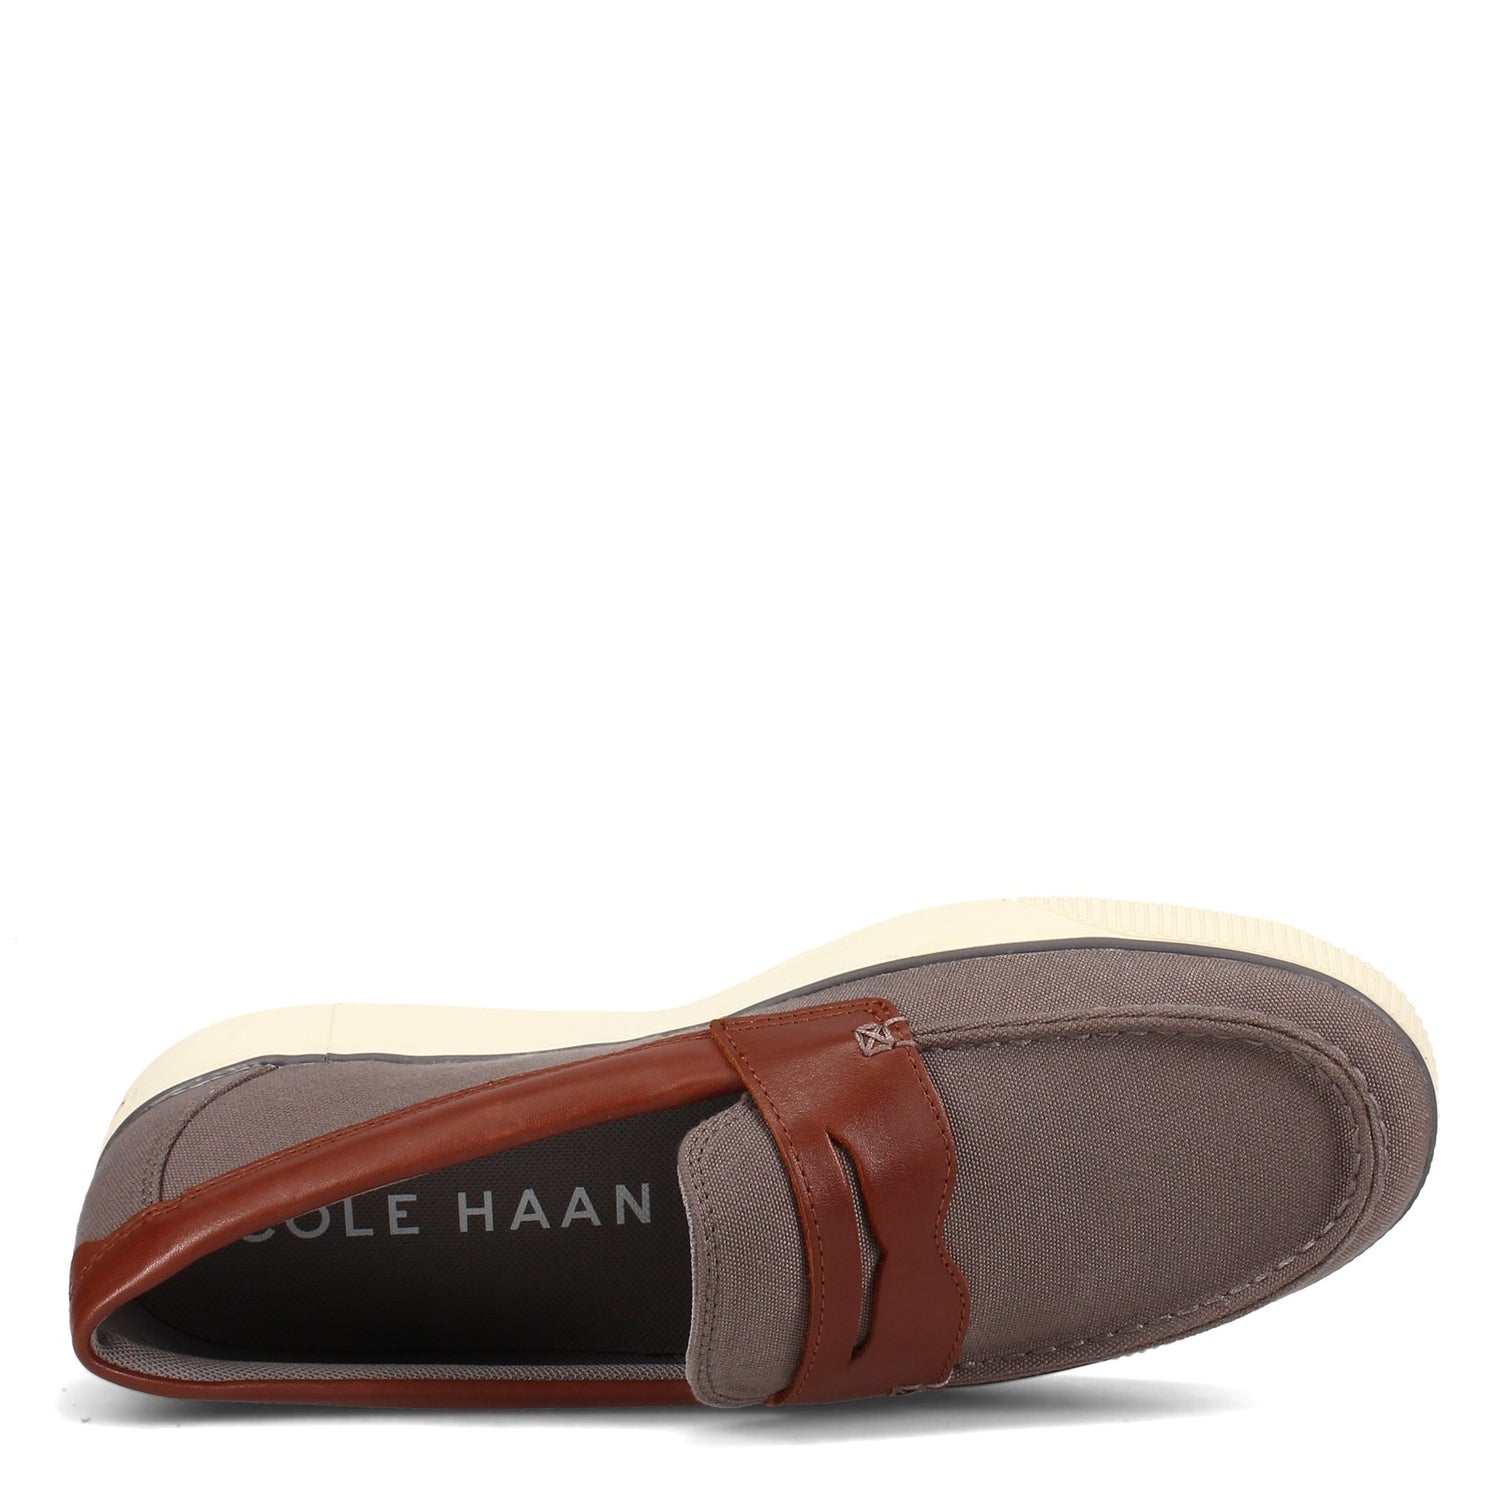 Peltz Shoes  Men's Cole Haan Nantucket Loafer II Penny Loafer GREY BROWN C33800